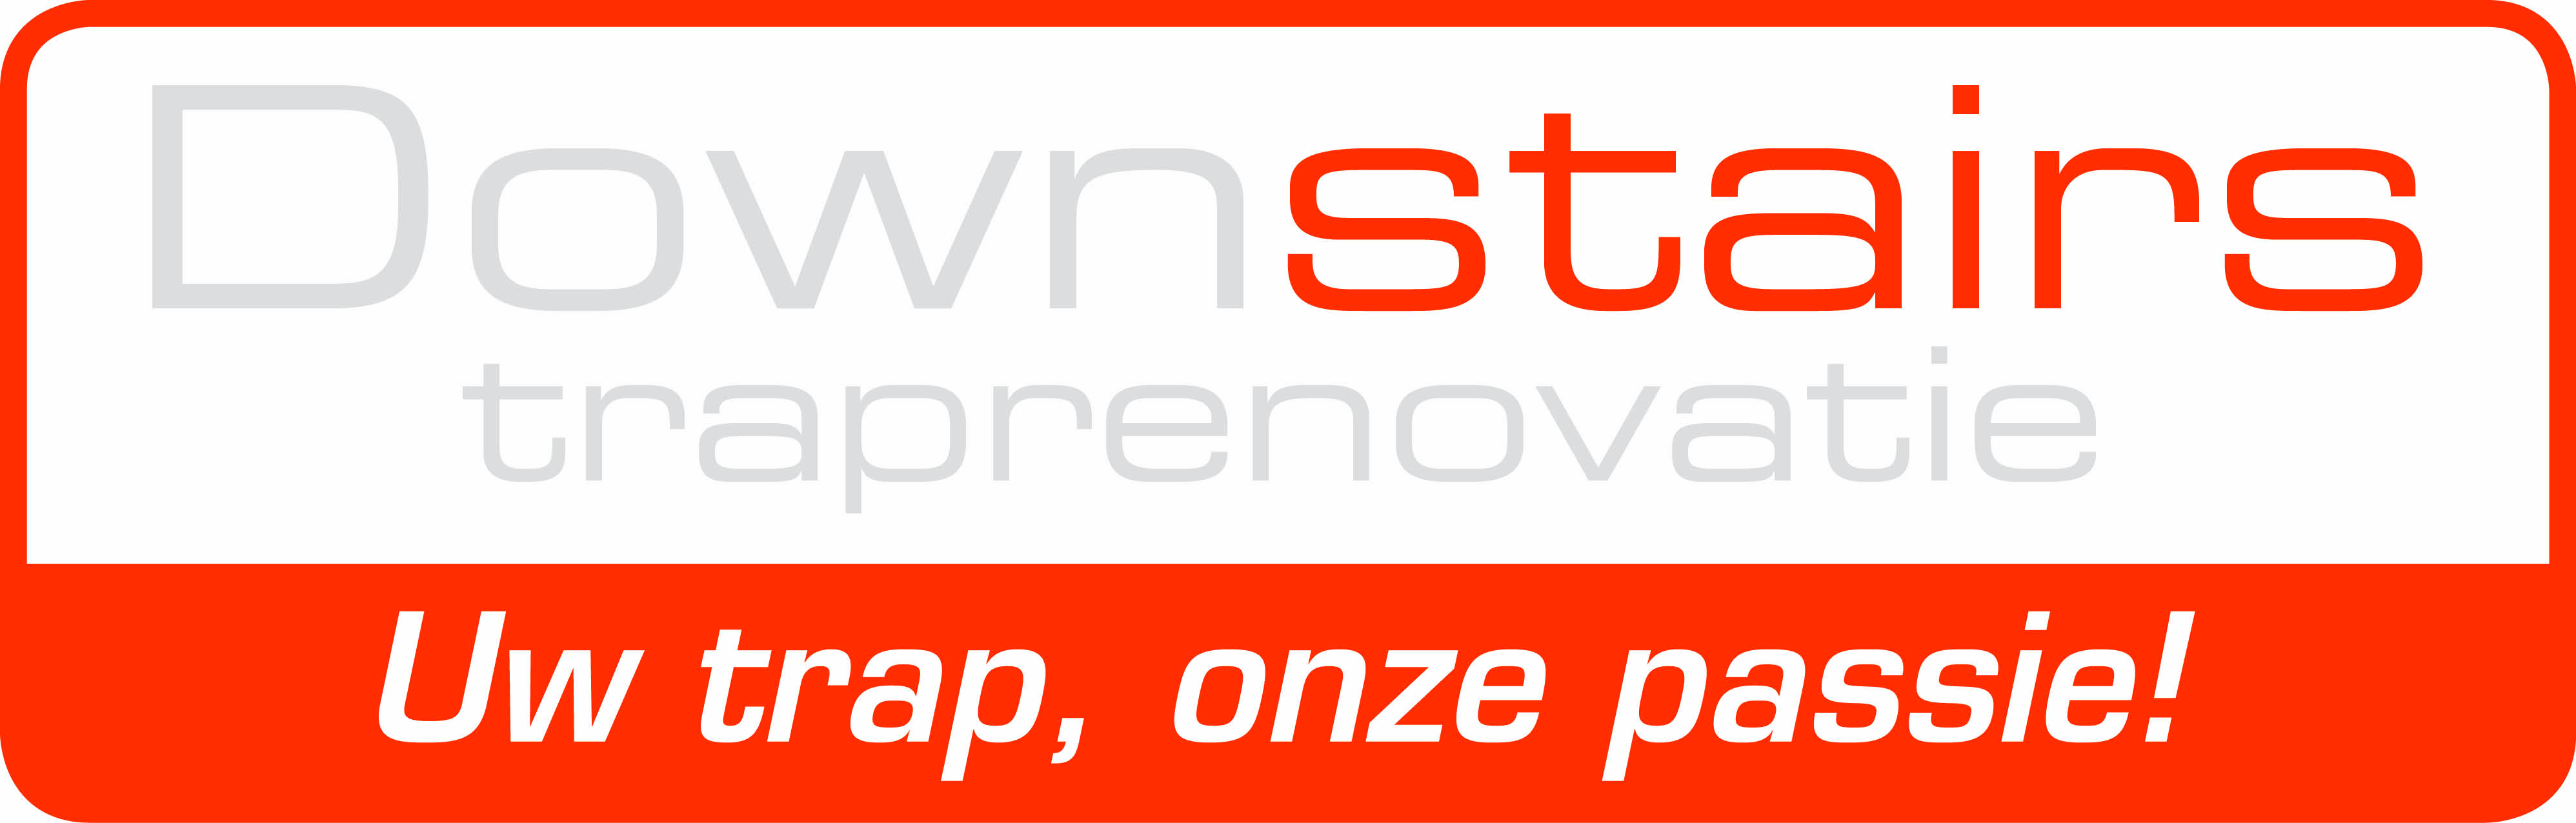 Downstairs Traprenovatie logo